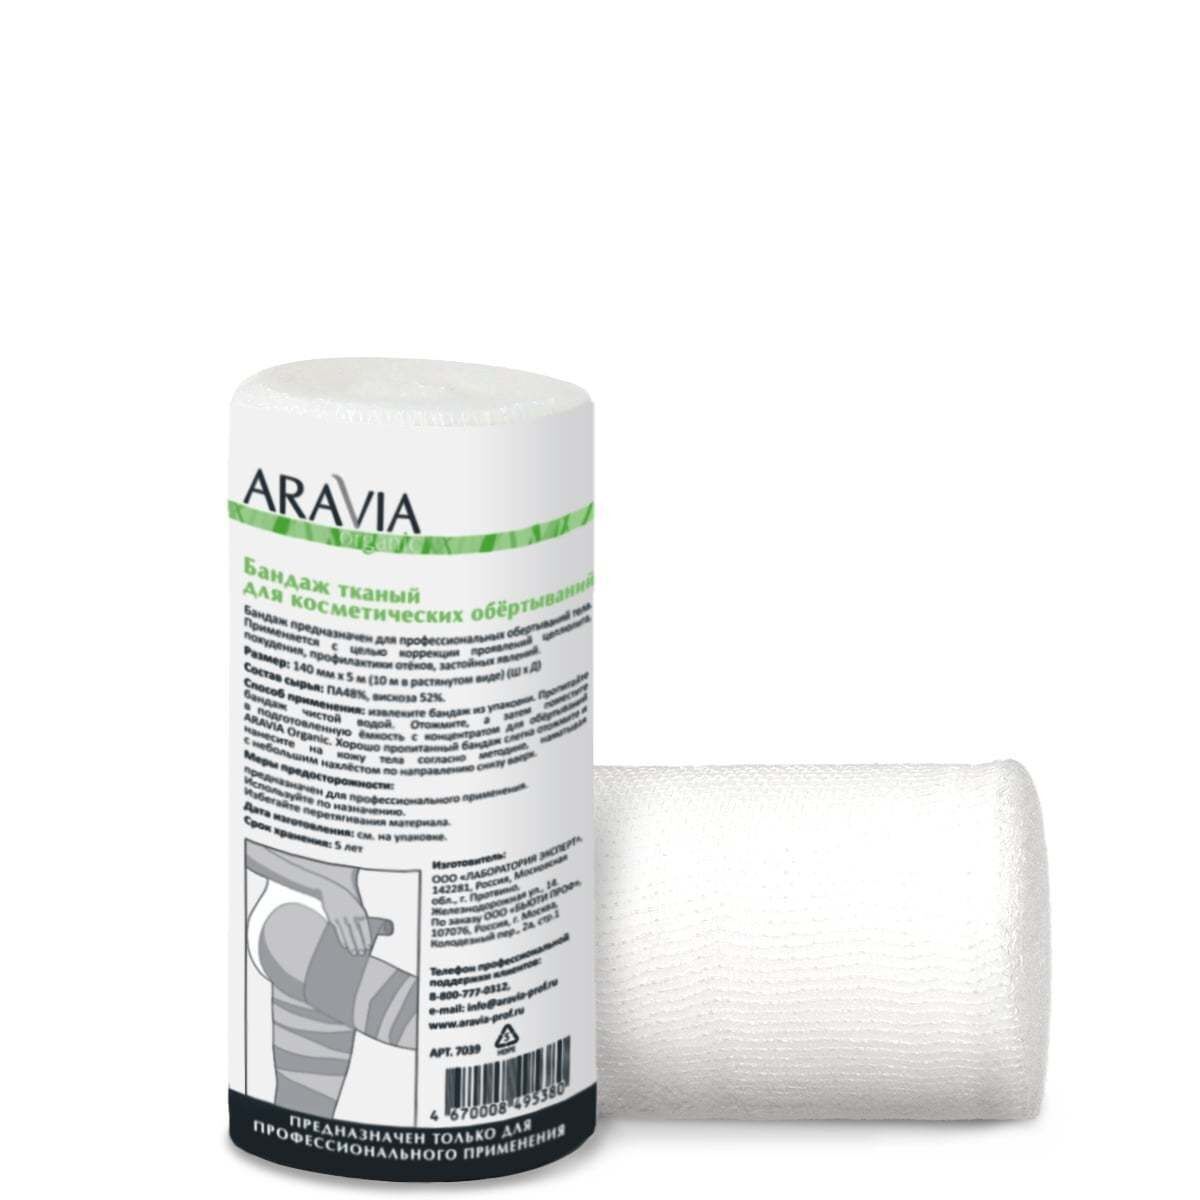 ARAVIA Organic" Бандаж тканный для косметических обертываний 14см.х10м